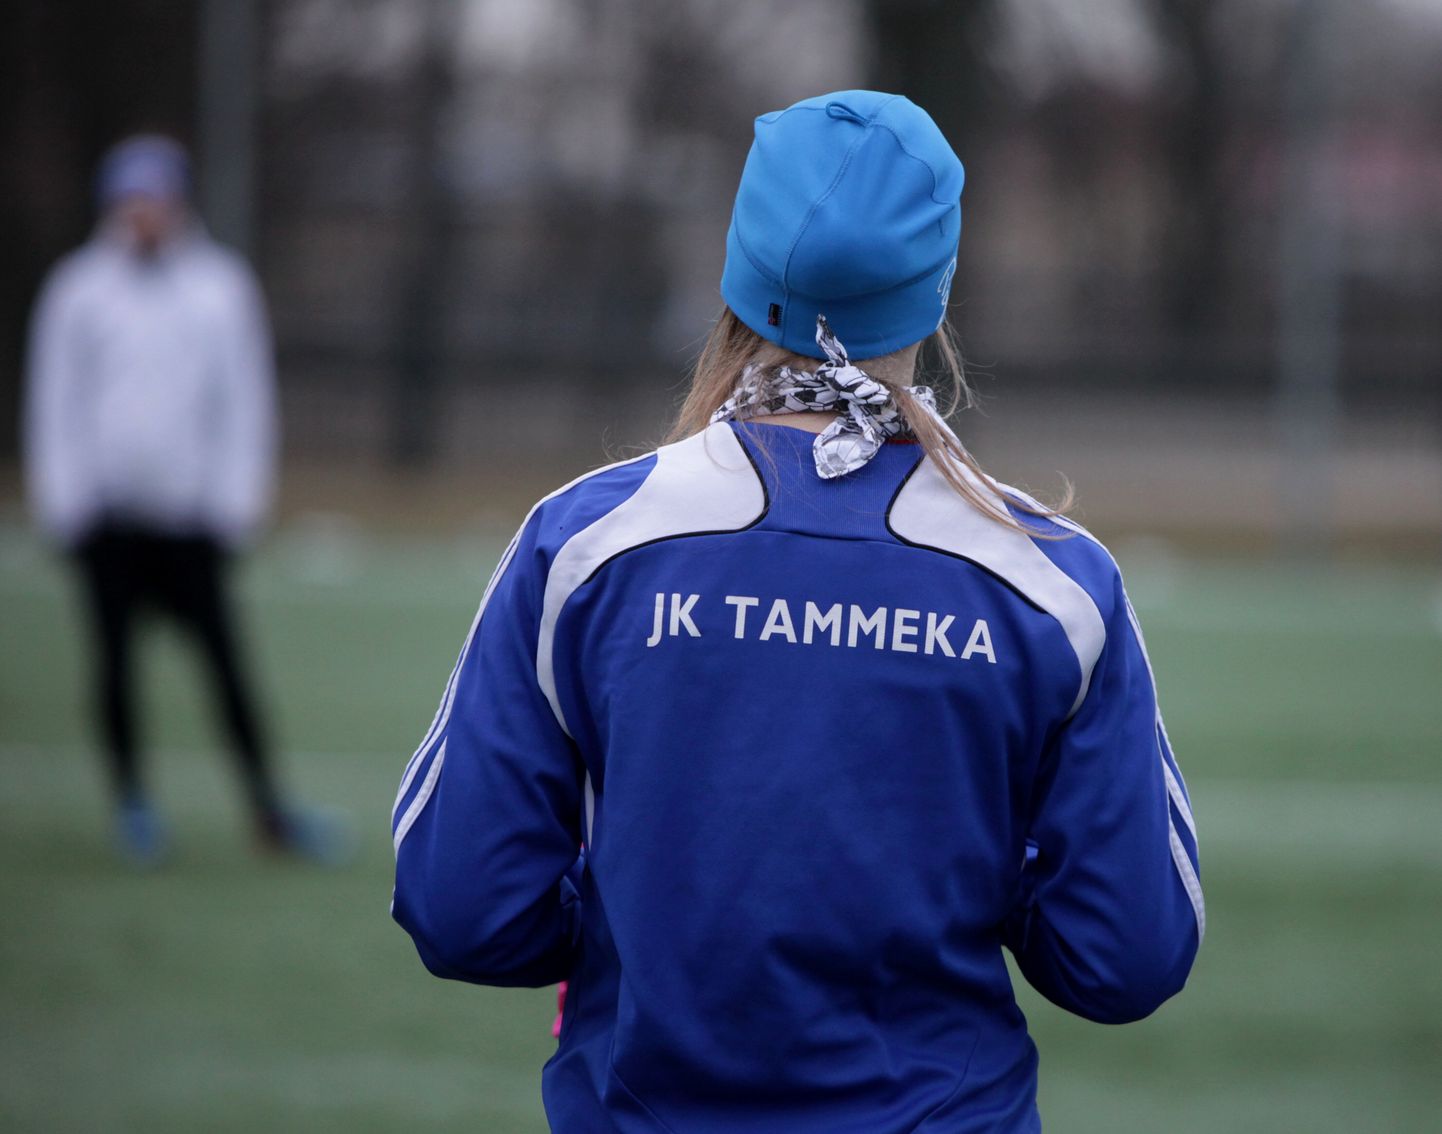 Pildil JC Tammeka naiskonna jalgpallitreening.

sa/Foto SILLE ANNUK POSTIMEES